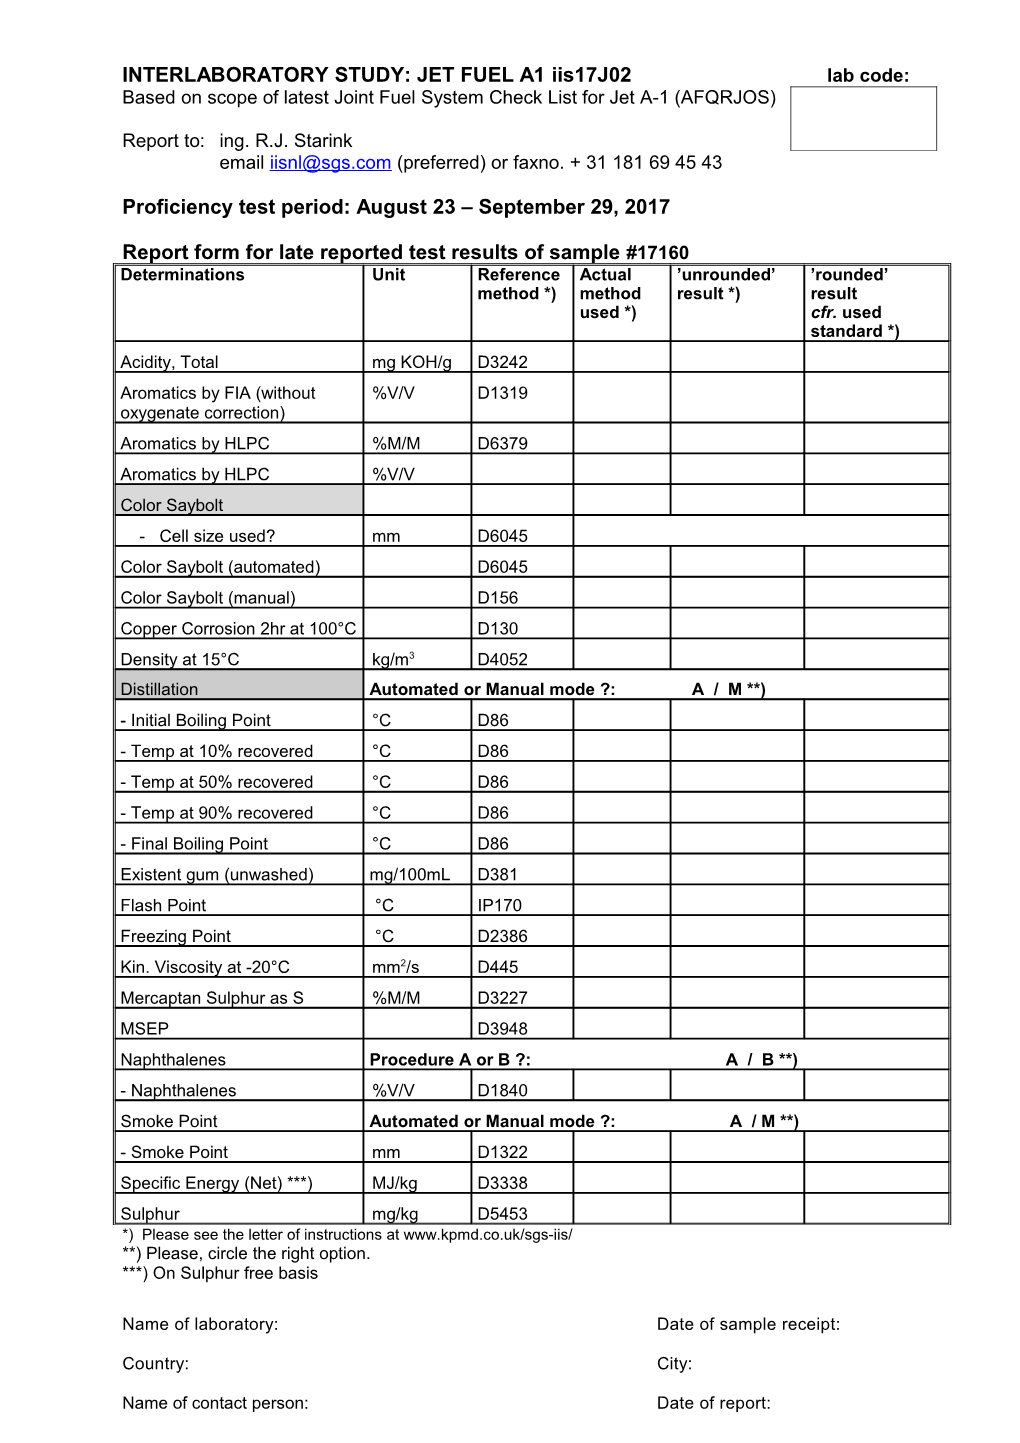 INTERLABORATORY STUDY Jet Fuel - Joint System Check List IIS00J01